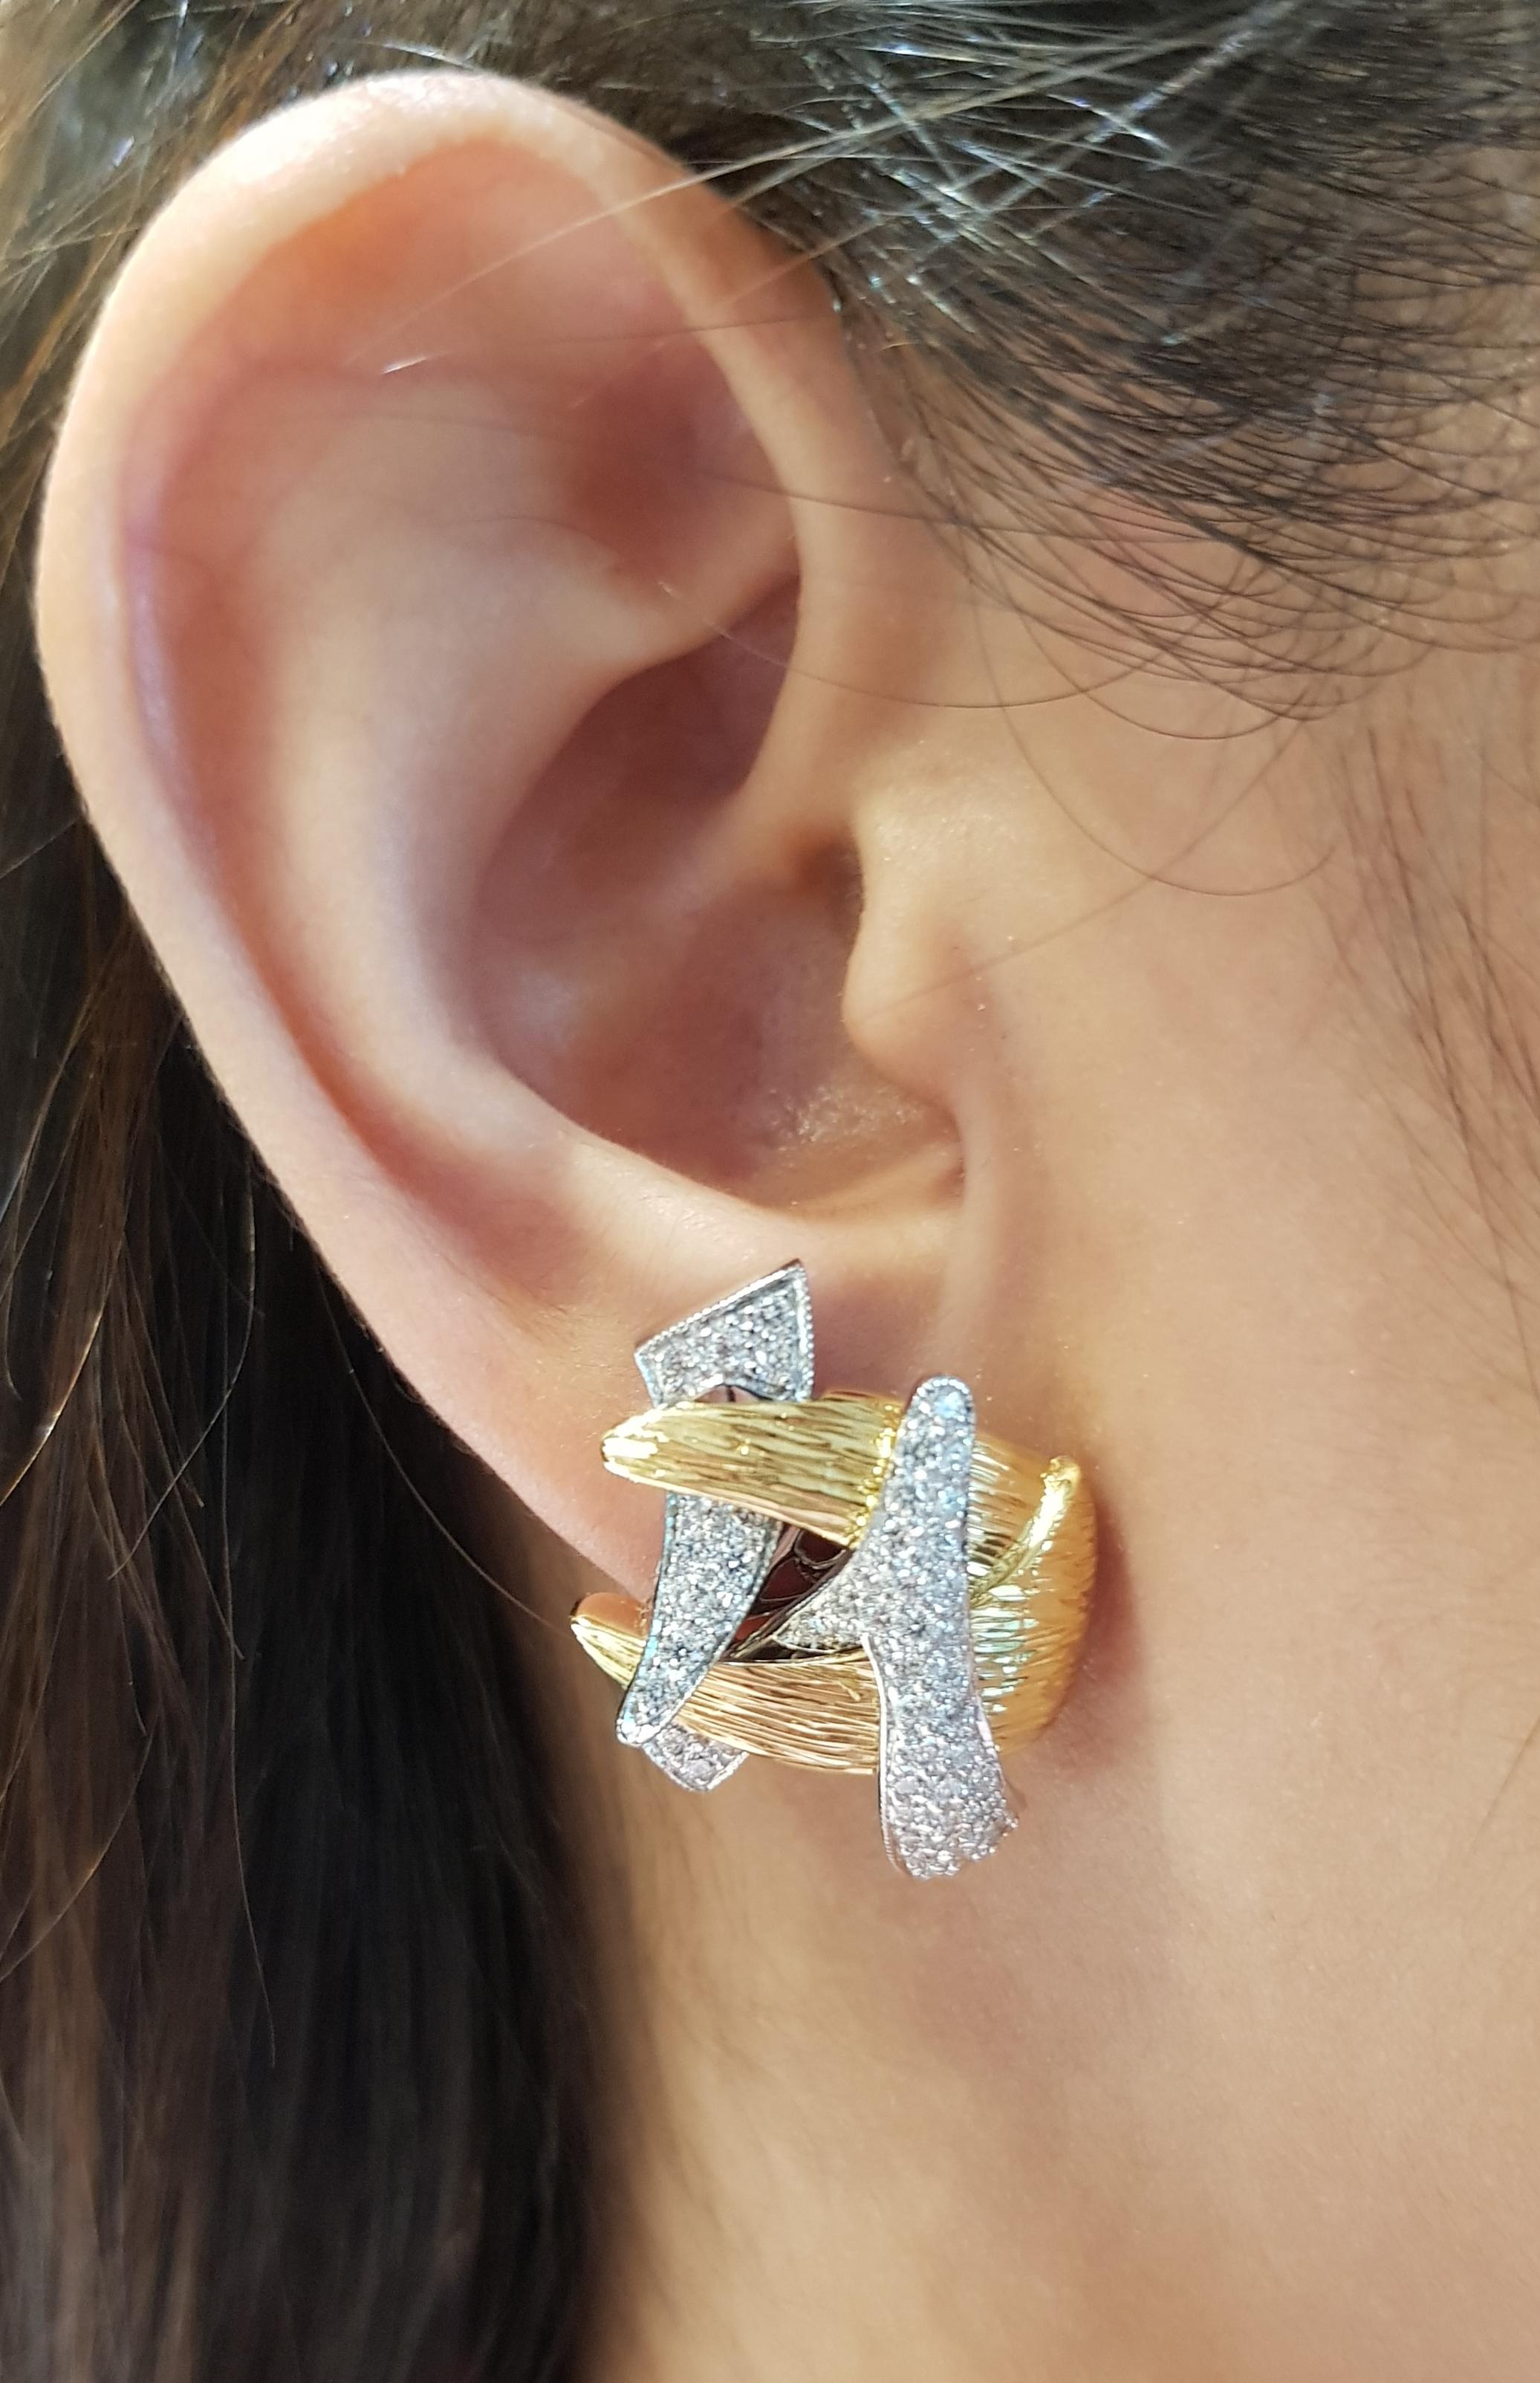 Diamond 1.64 carats Earrings set in 18 Karat Gold Settings

Width:  2.6 cm 
Length:  2.1 cm
Total Weight: 18.53 grams

